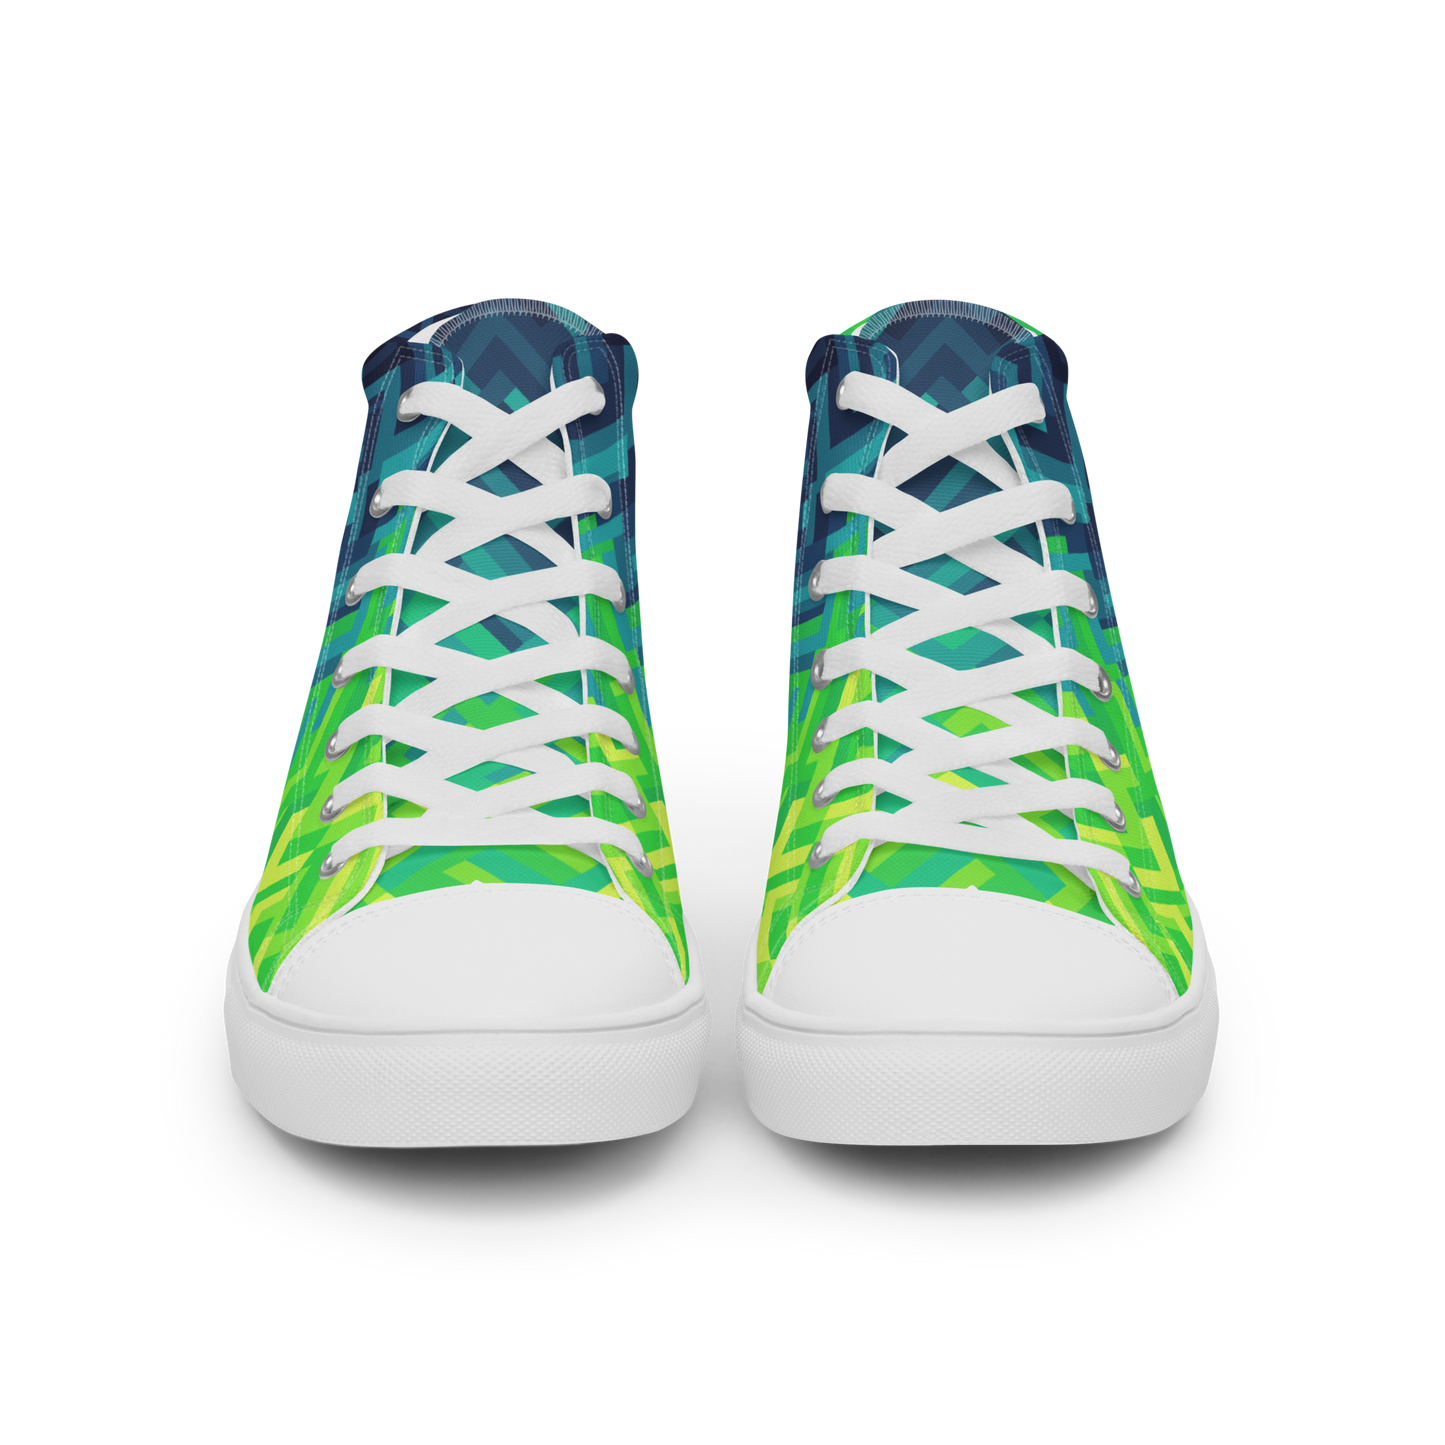 Men's Canvas Sneakers ❯ Polygonal Gradient ❯ Aurora Borealis